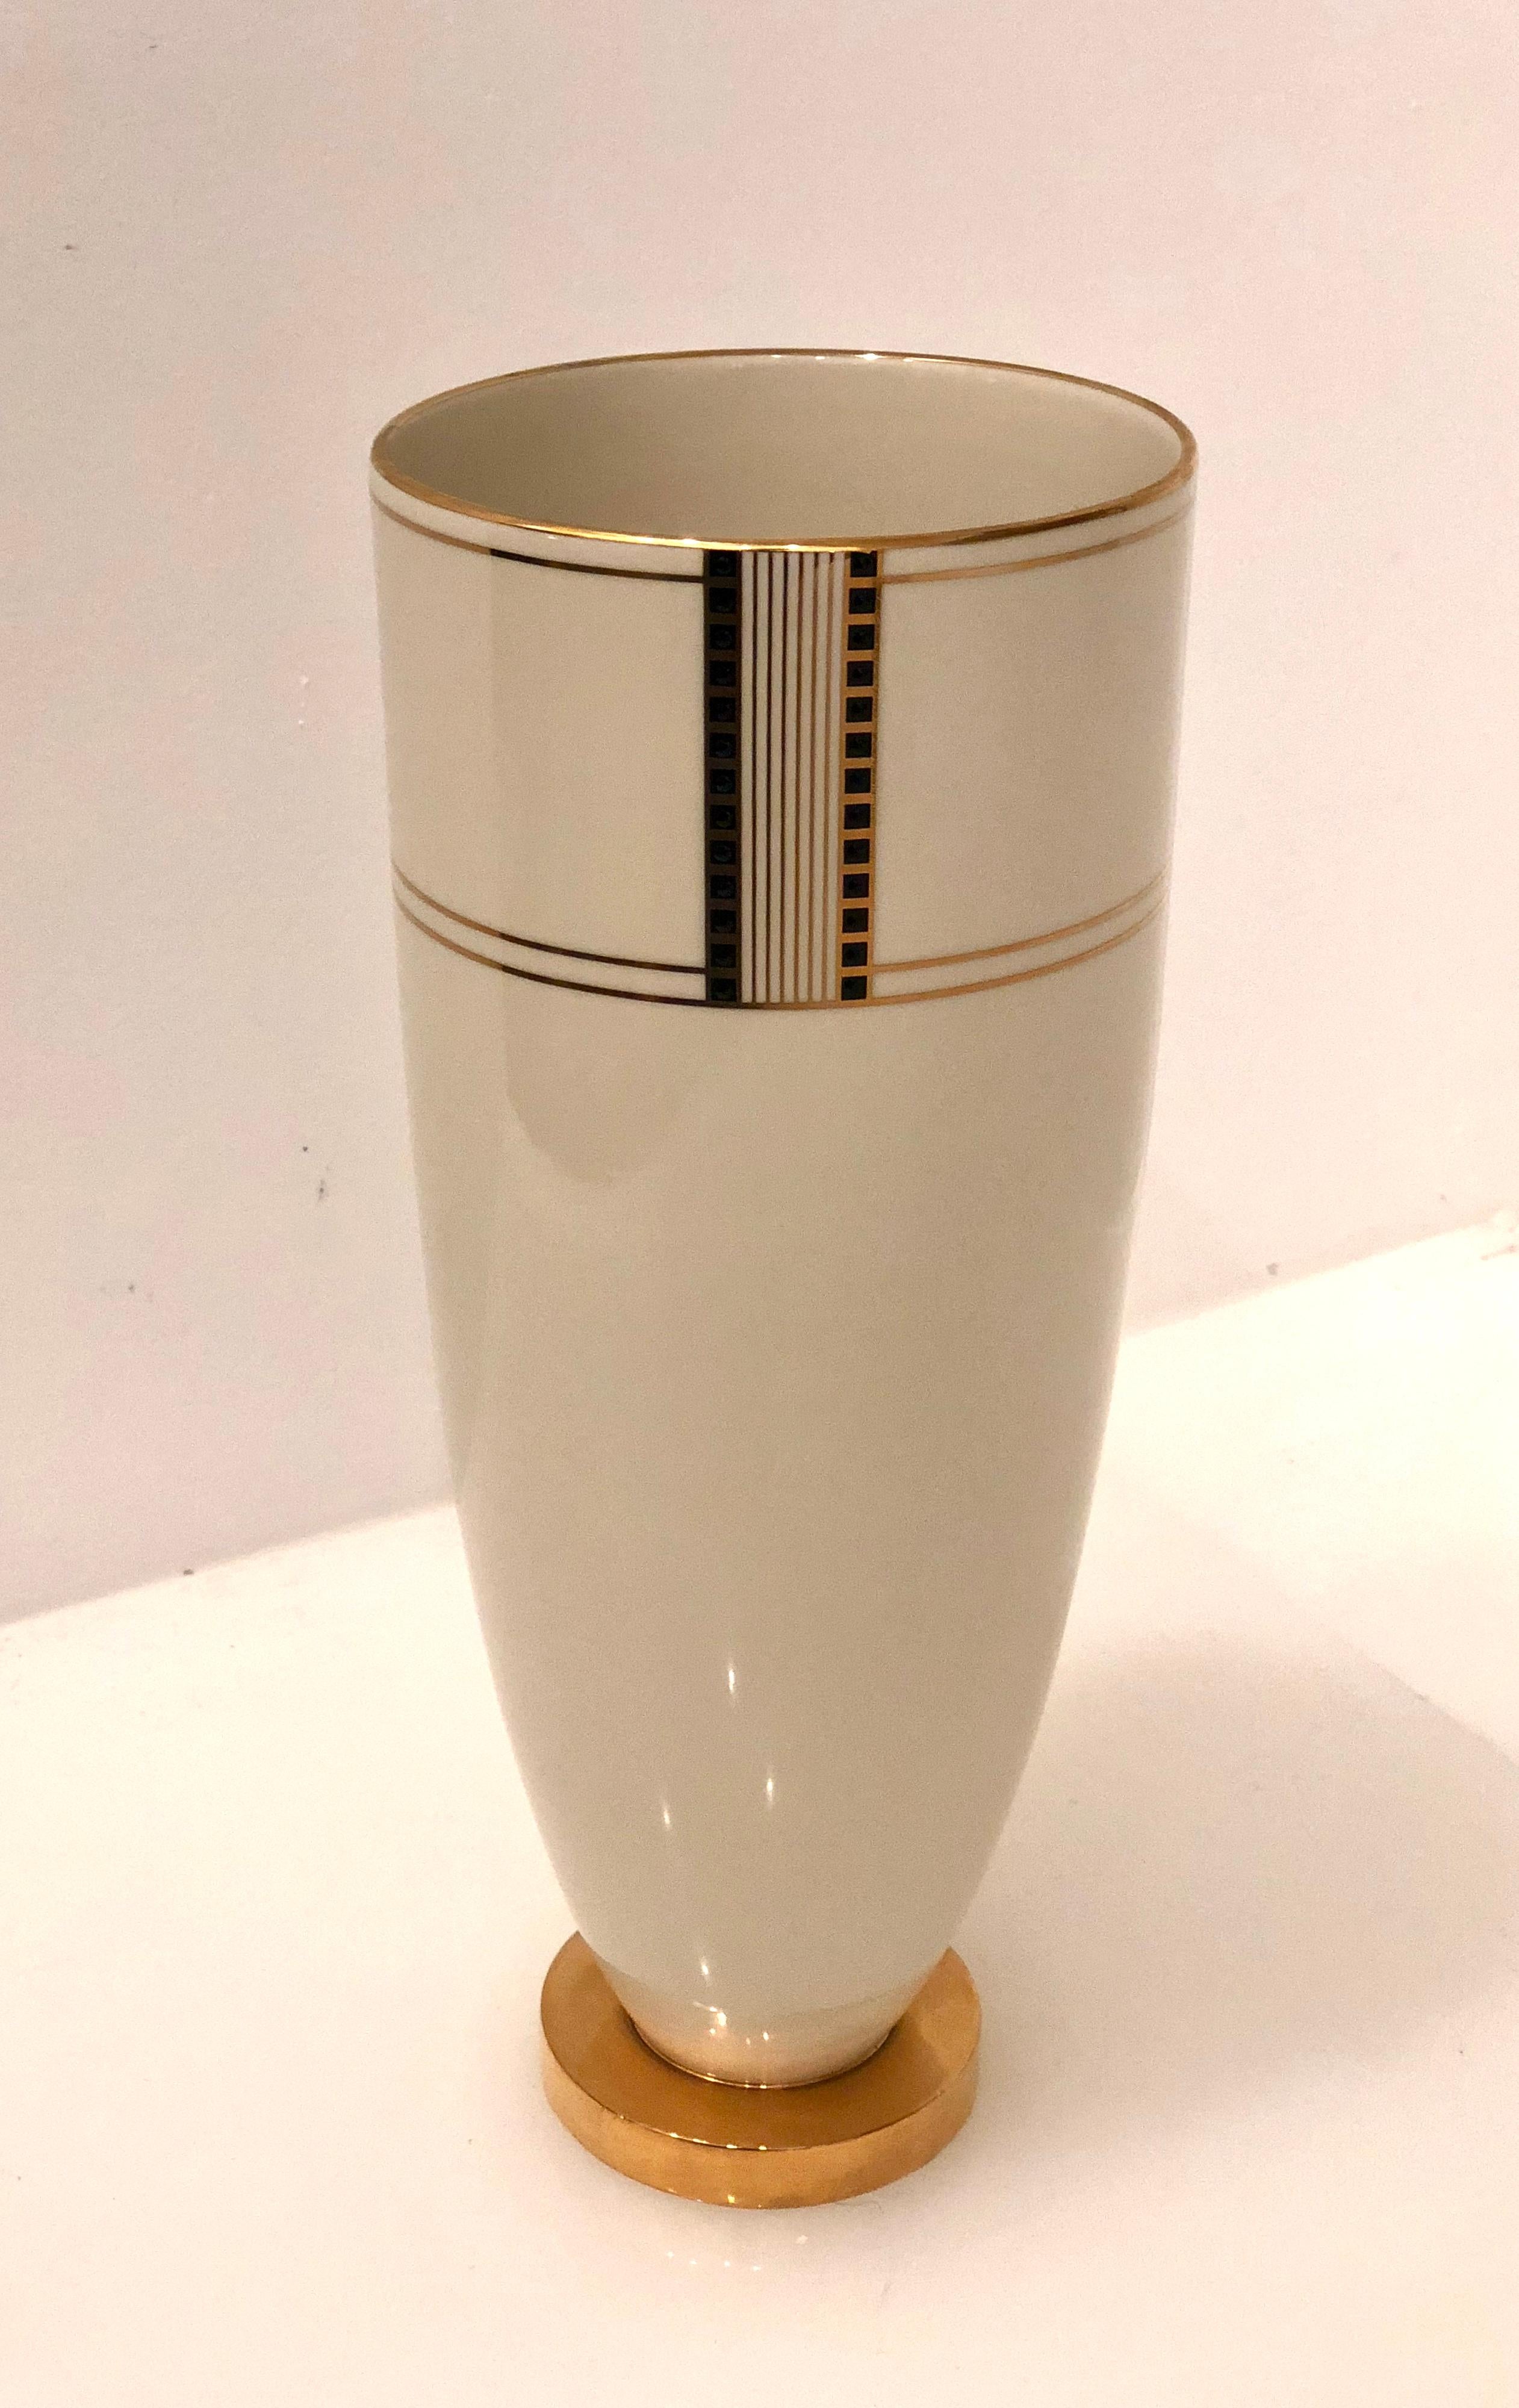 lenox vases with gold trim